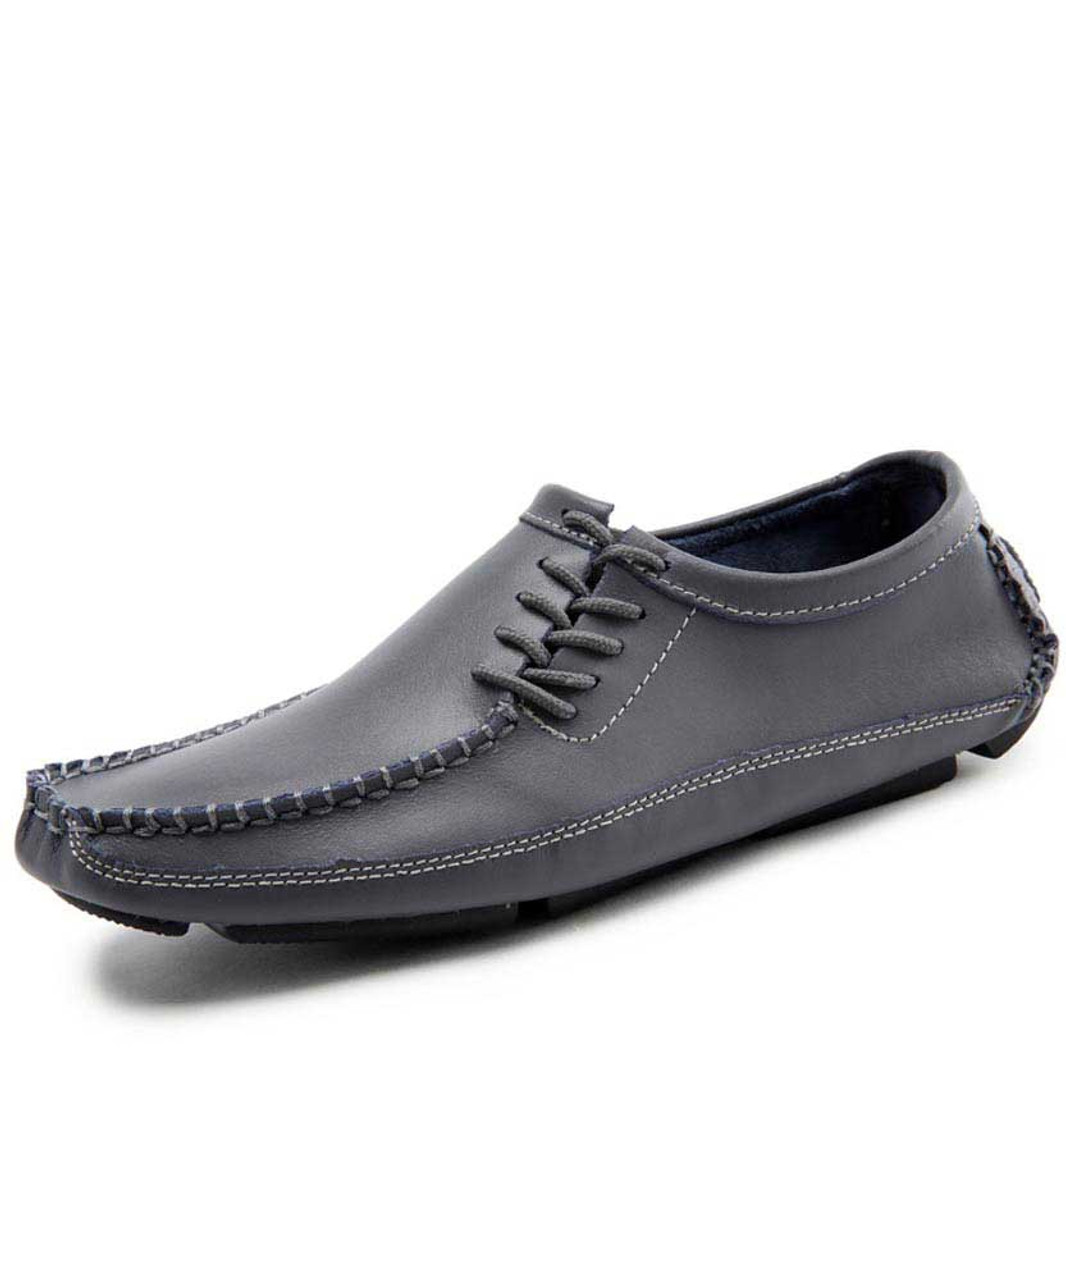 mens slip on shoes grey